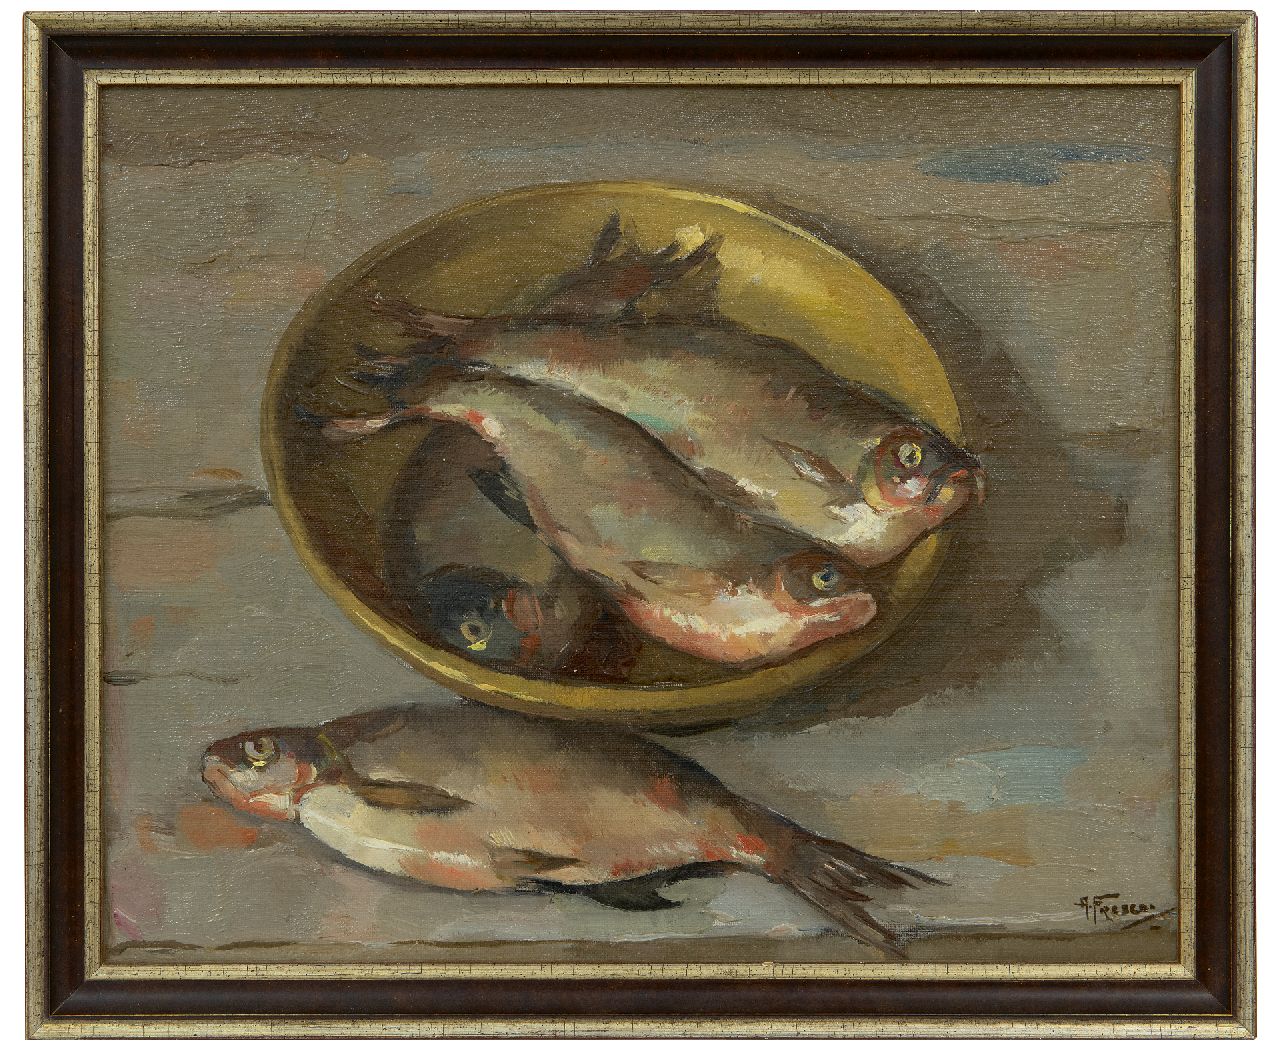 Fresco A.  | Abraham Fresco, Herring in a bowl, oil on canvas 33.2 x 40.6 cm, signed l.r.